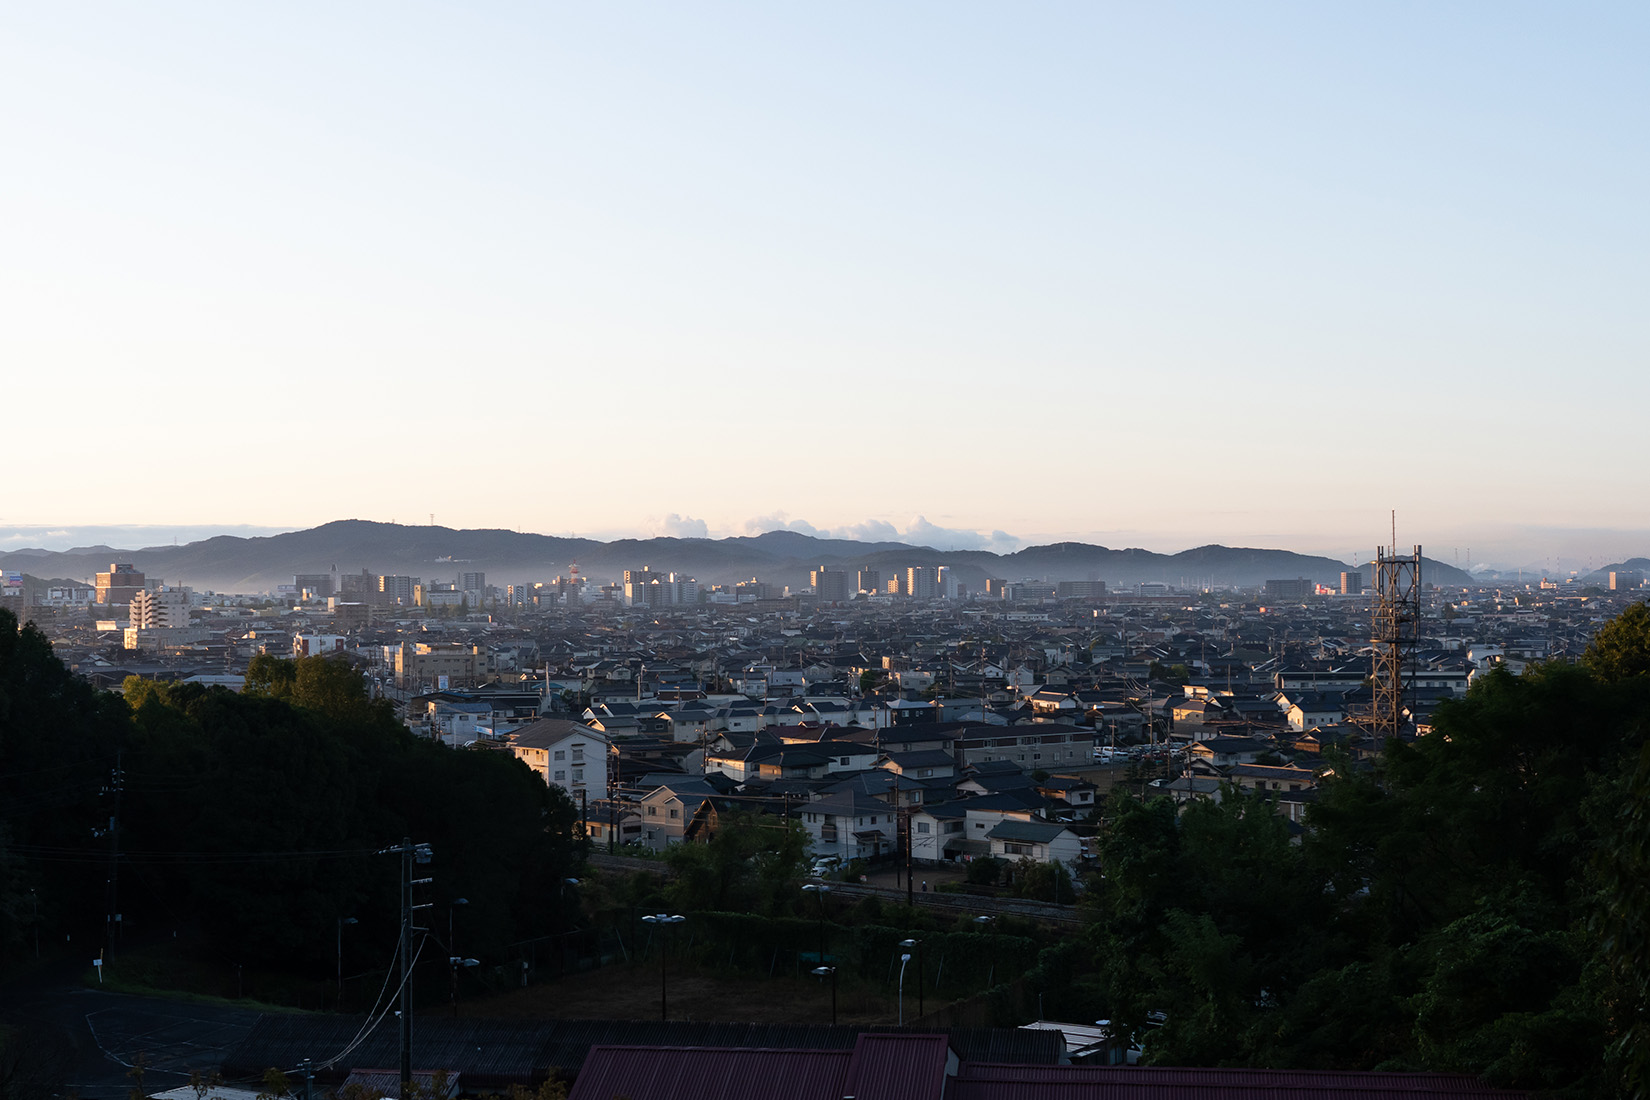 The cityscape of Kurashiki, where AEDI is based